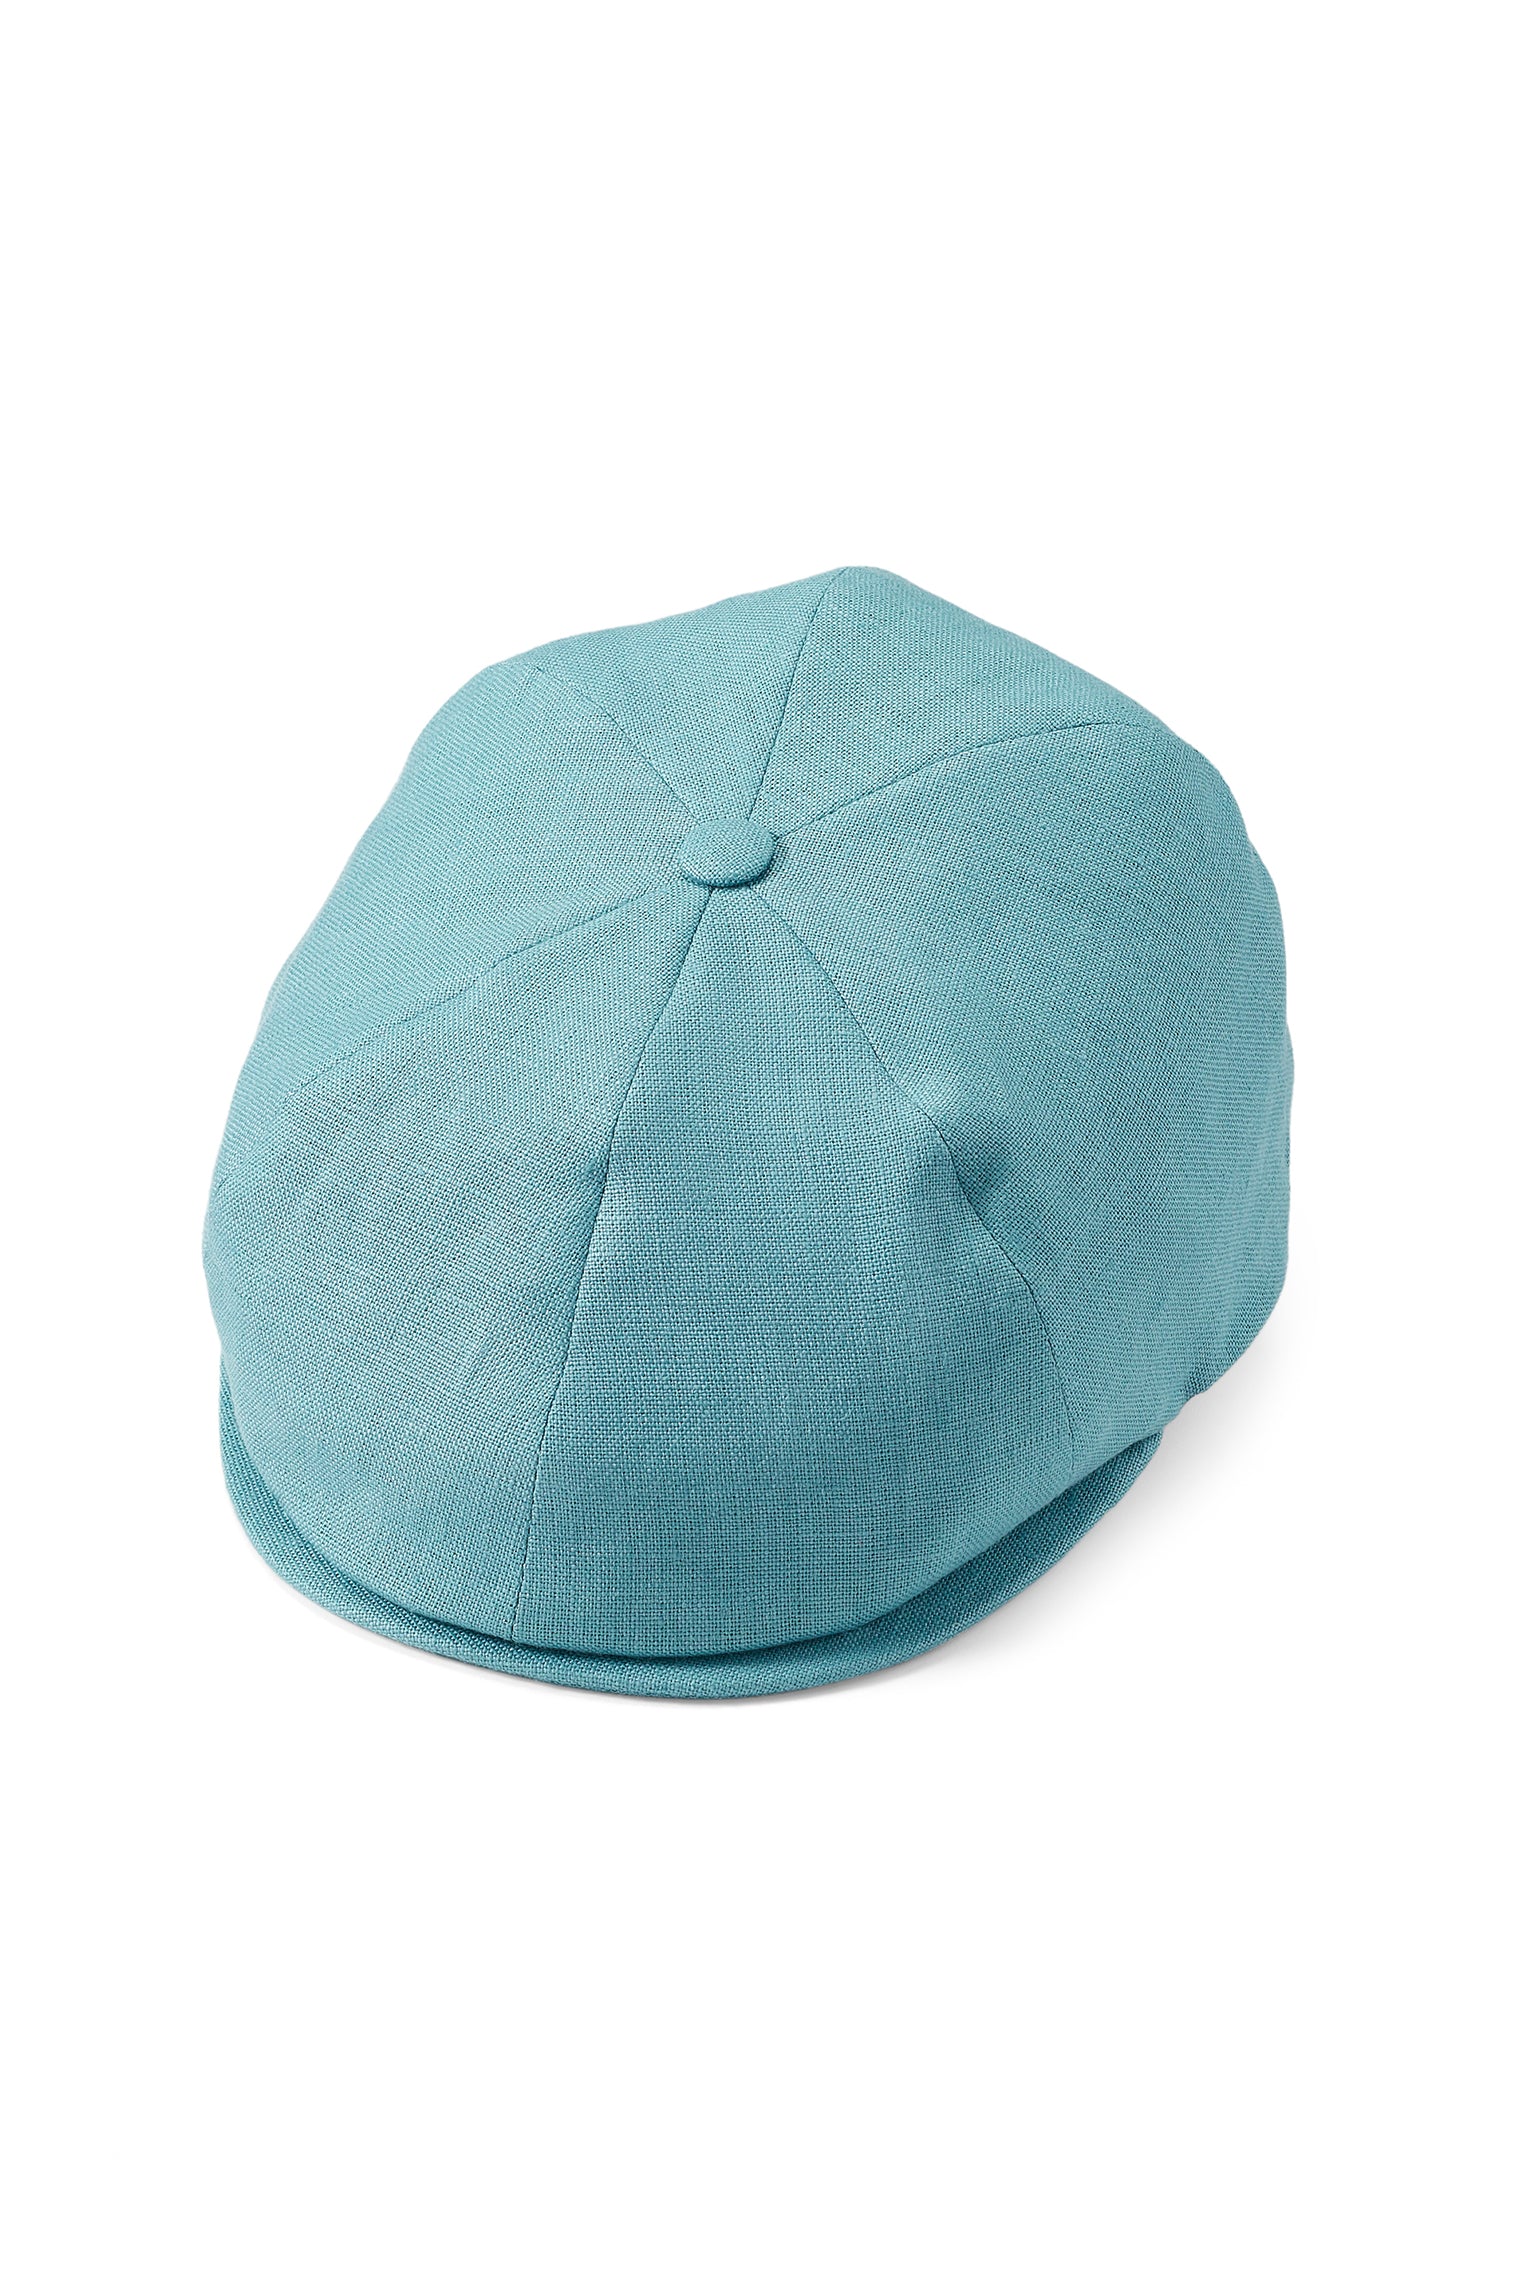 Tahoe Turquoise Bakerboy Cap - New Season Men's Hats - Lock & Co. Hatters London UK